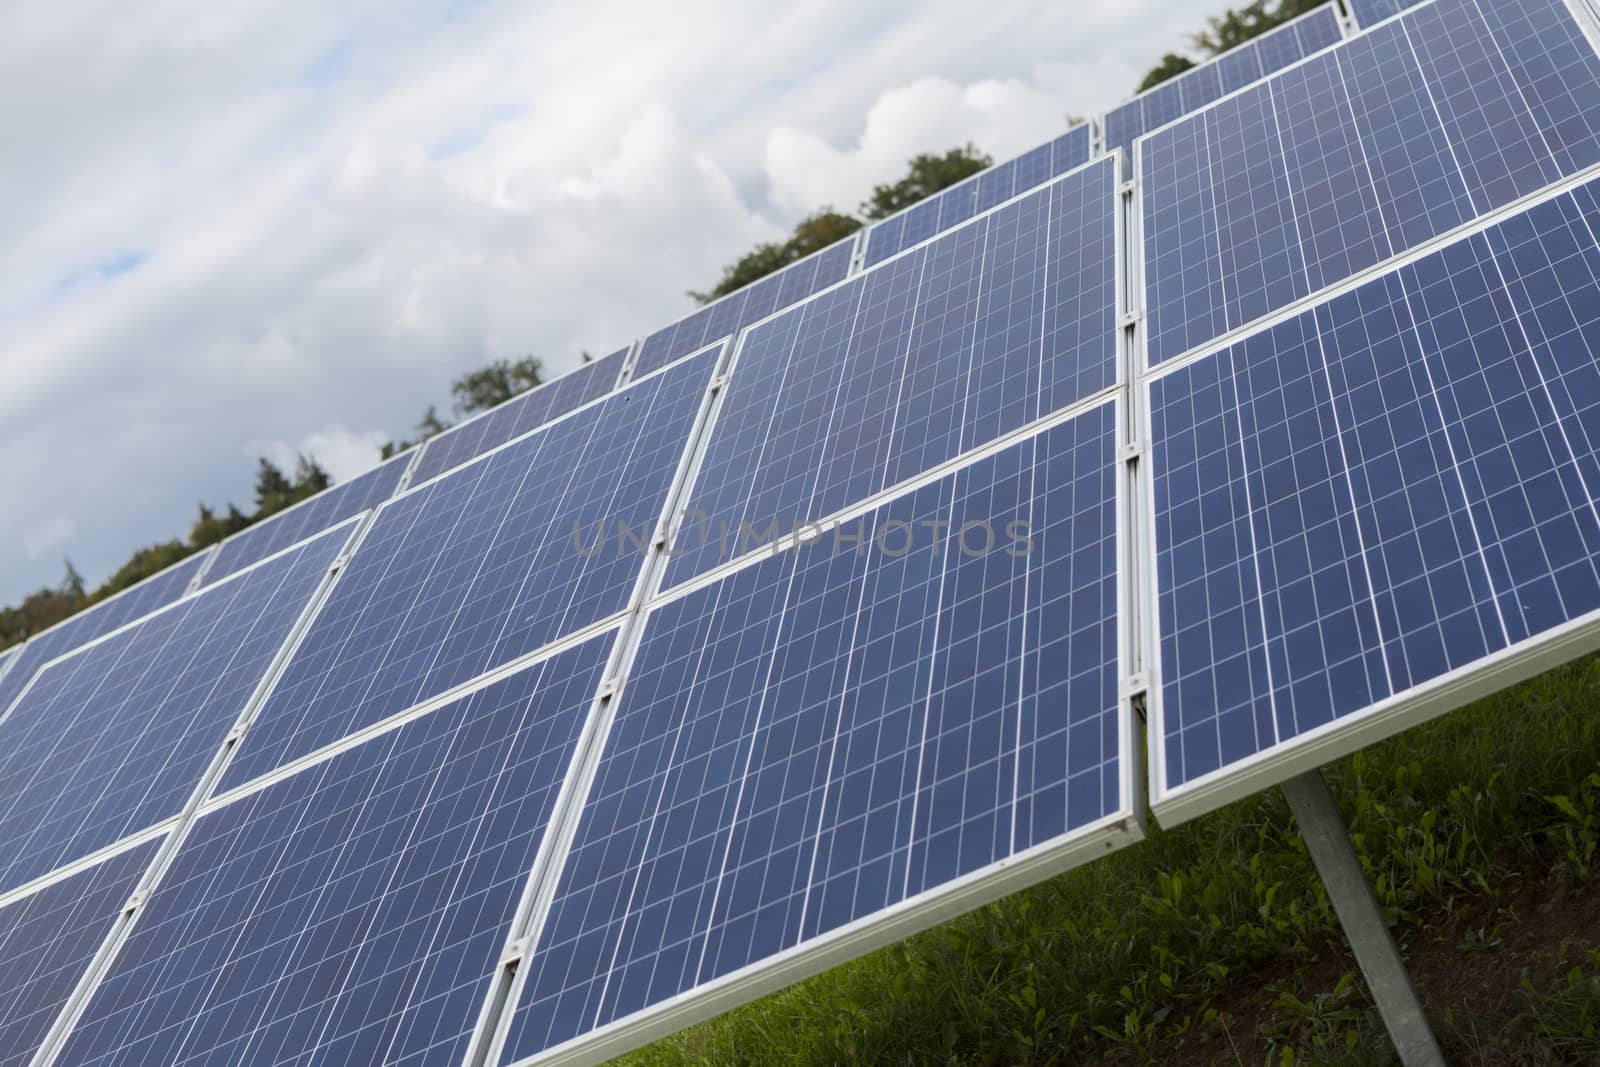 Field with blue siliciom solar cells alternative energy to collect sun energy